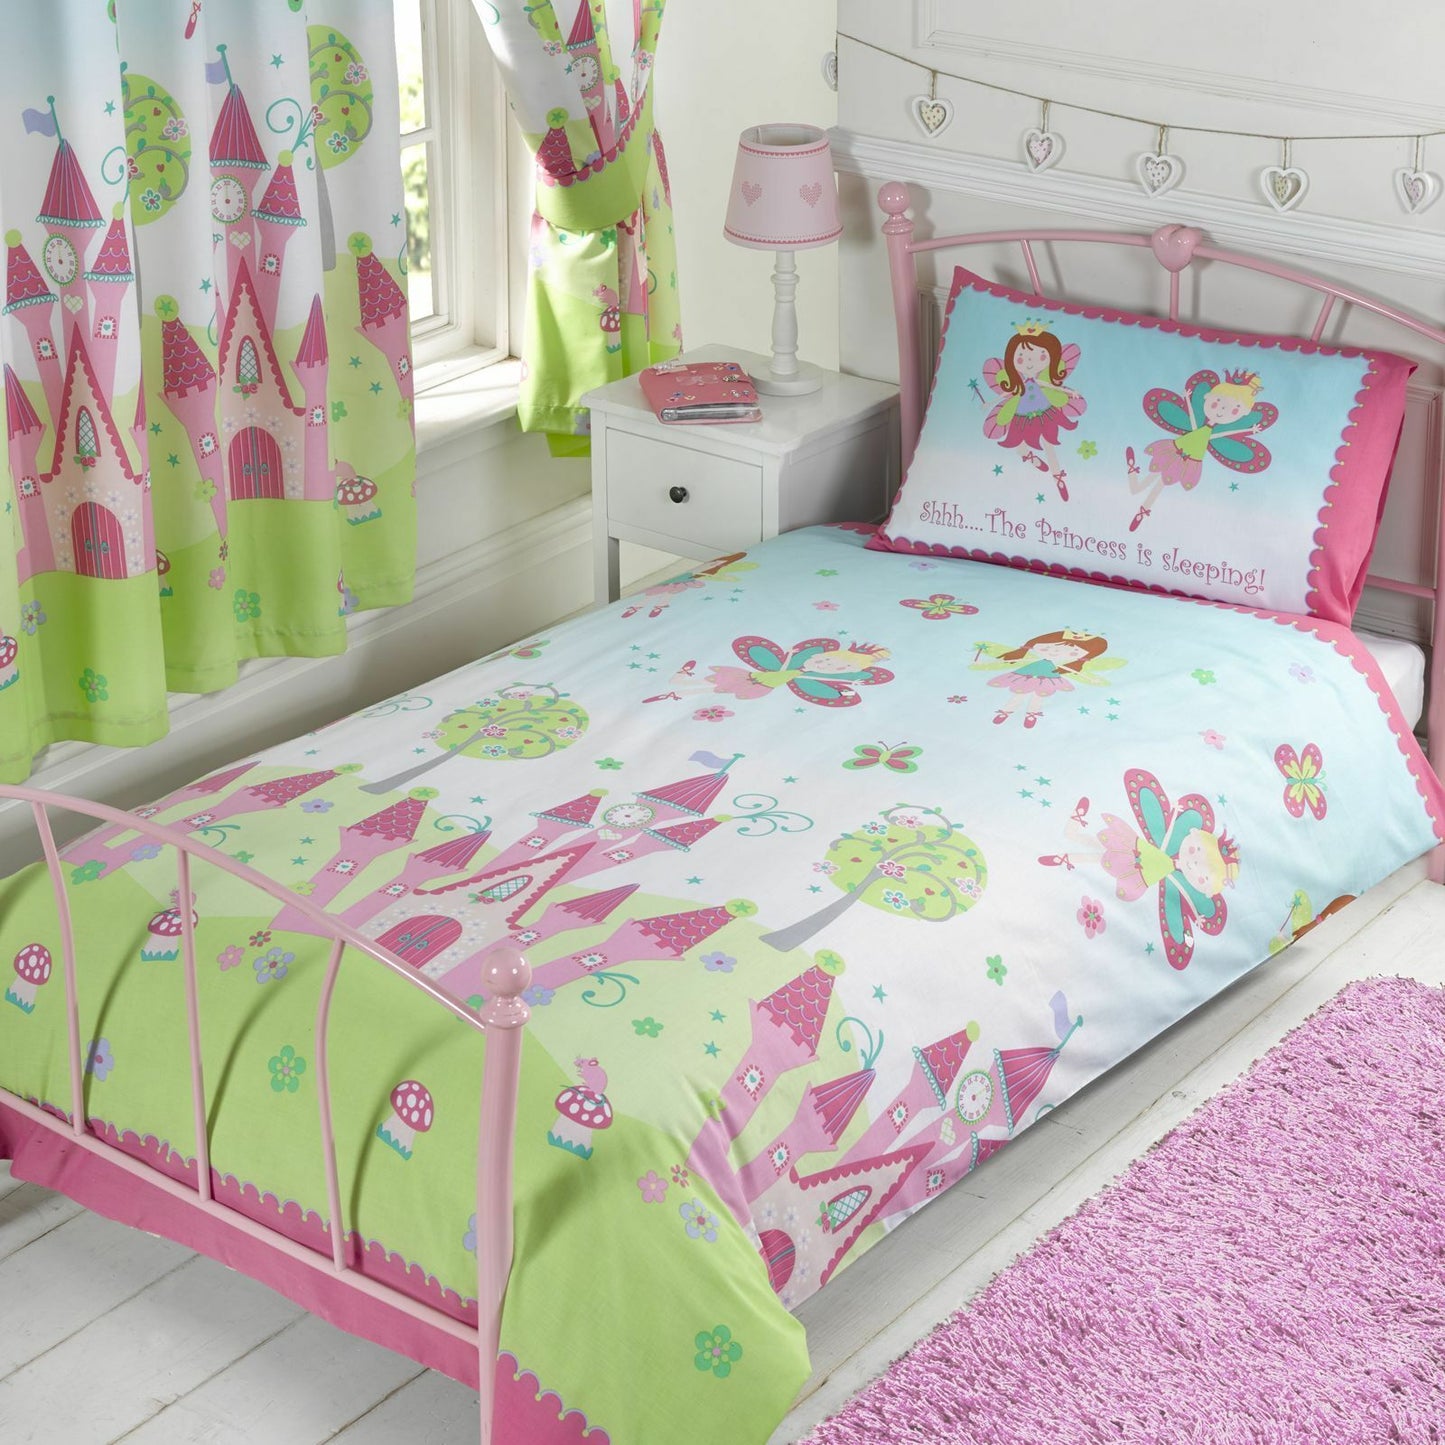 Fairy Princess Sleeping Duvet Cover Kids Bedding Set